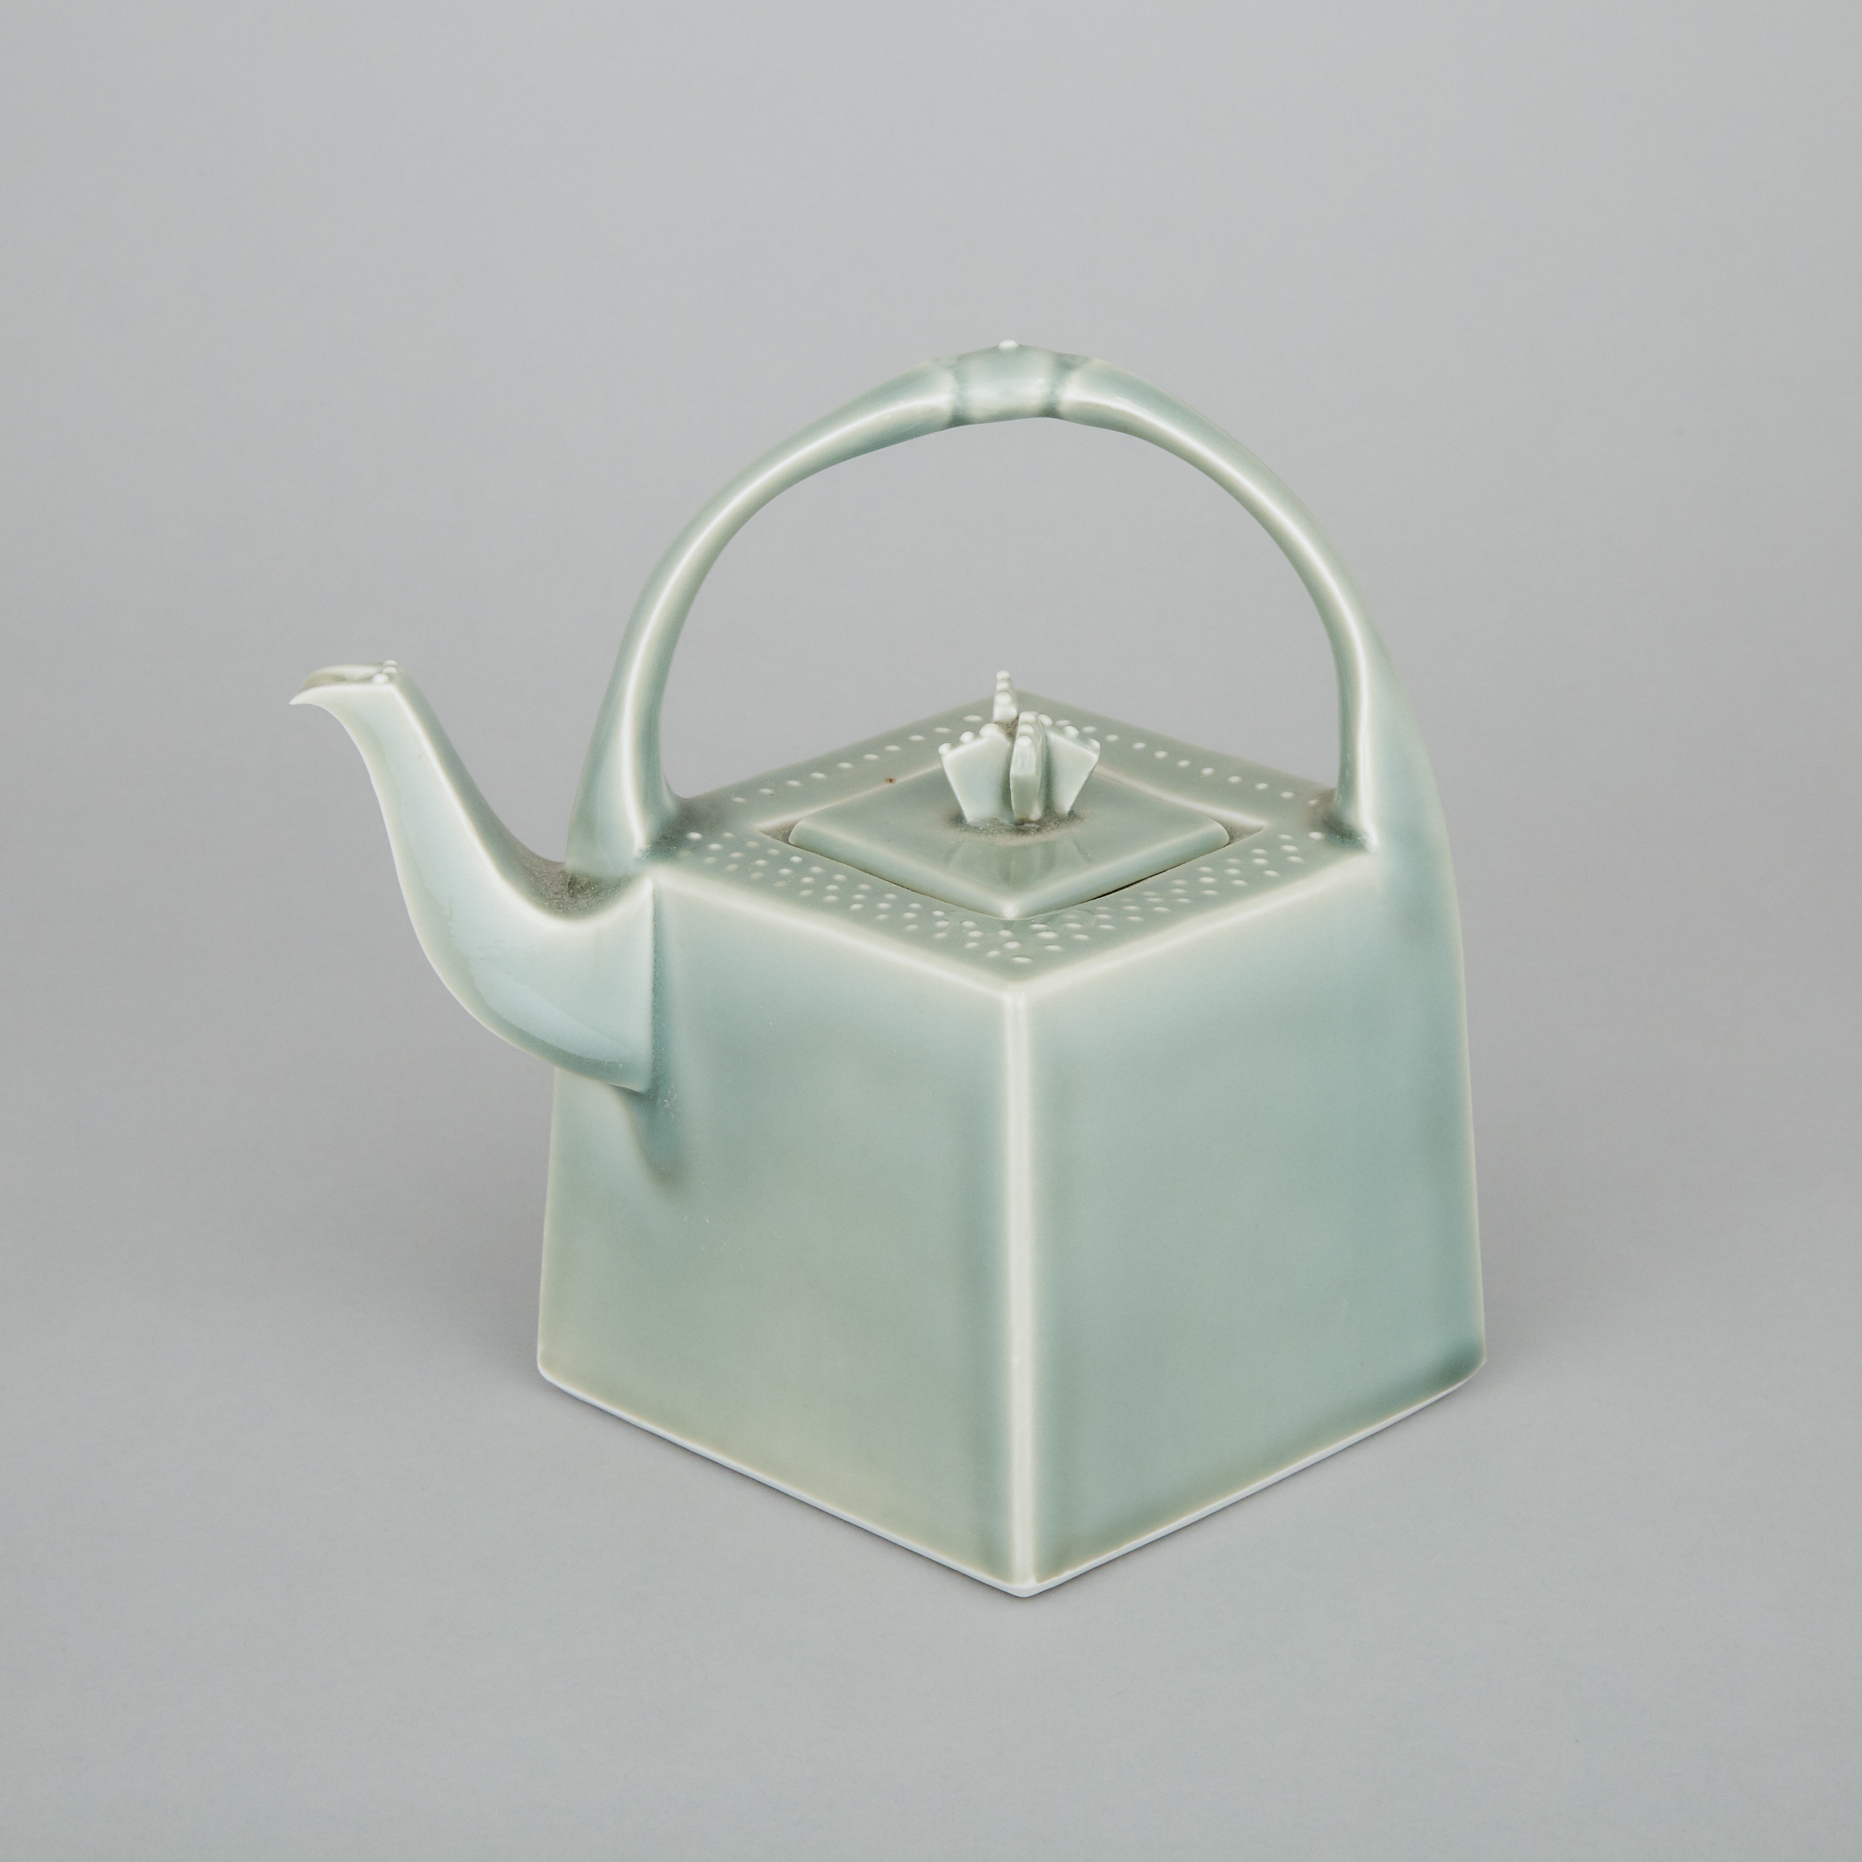 Harlan House (Canadian, b.1943), Celadon Glazed Teapot, 1994